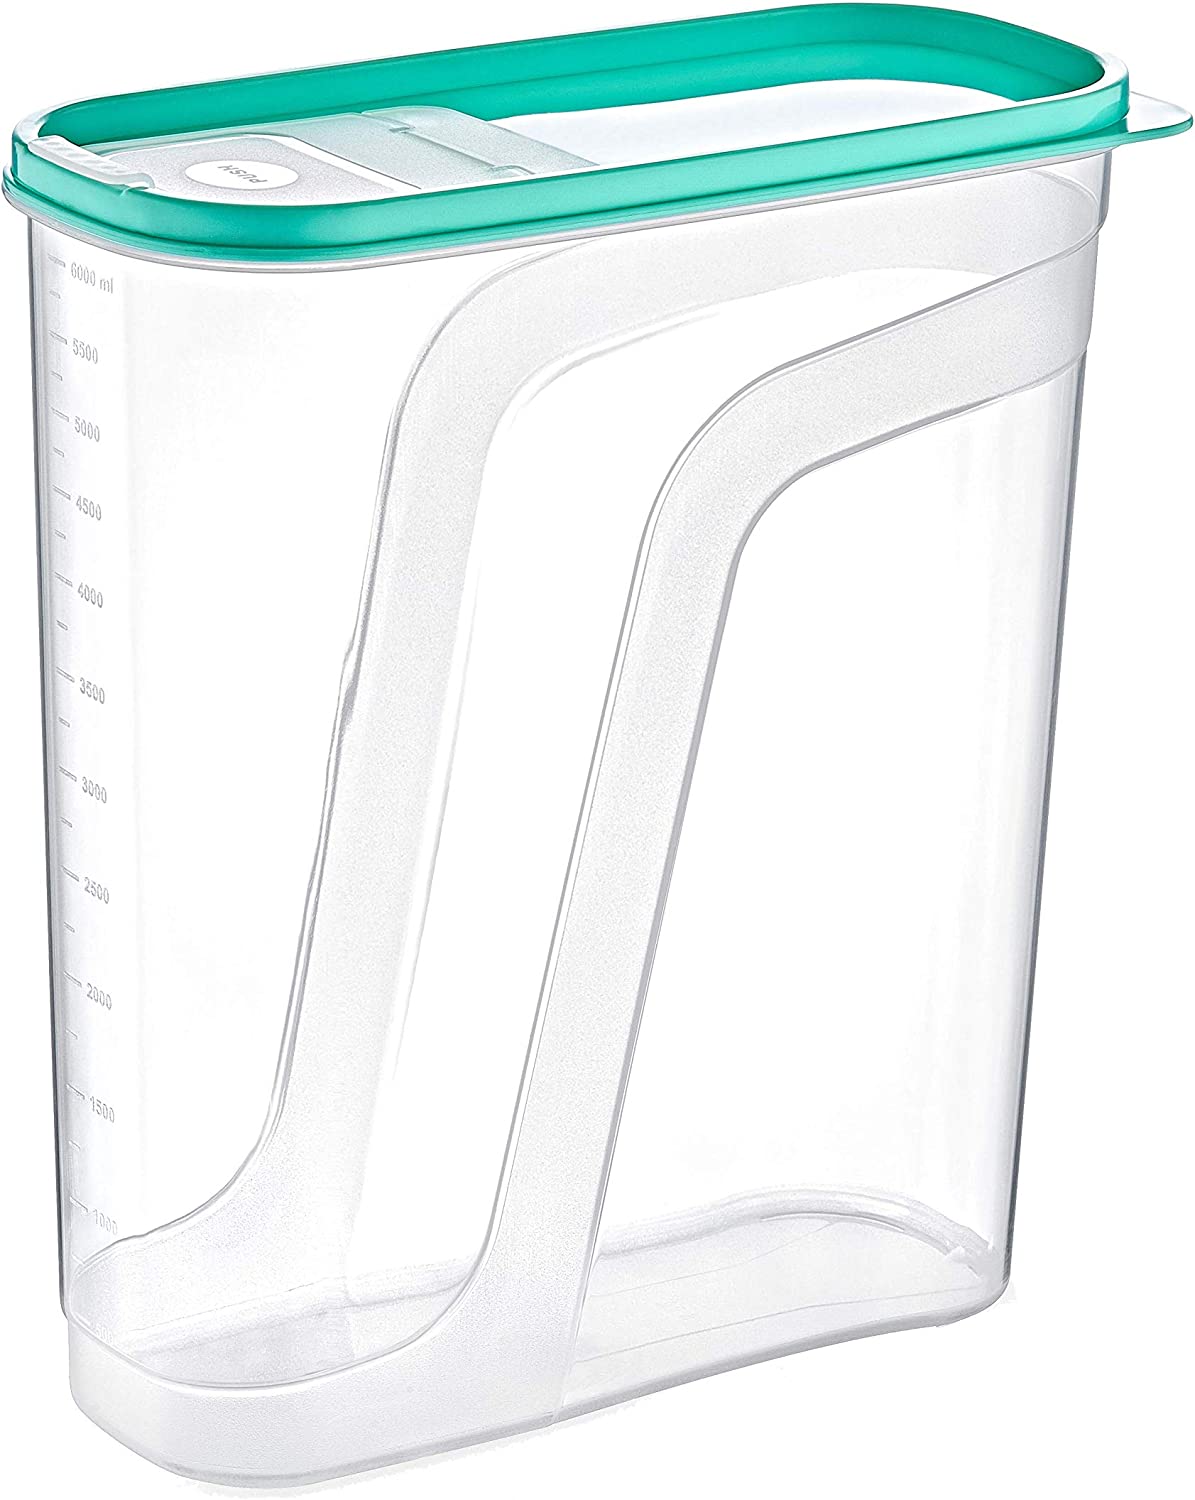 Uniware BPA Free Plastic Food Storage Container (6 Liter (6.3 QT), 1 Pack)